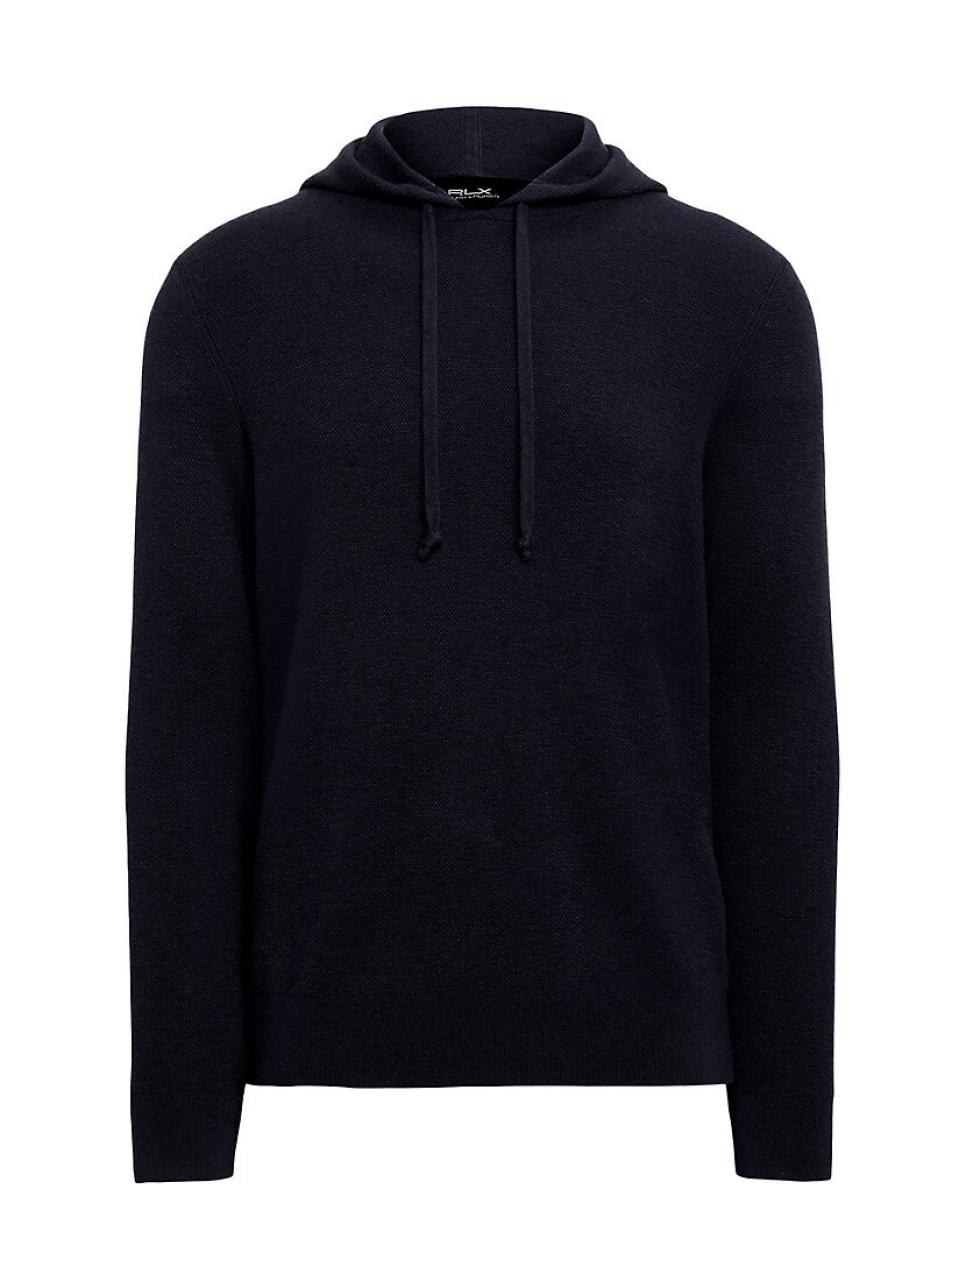 rx-ralphlaurenrlx-cashmere-hooded-sweater.jpeg